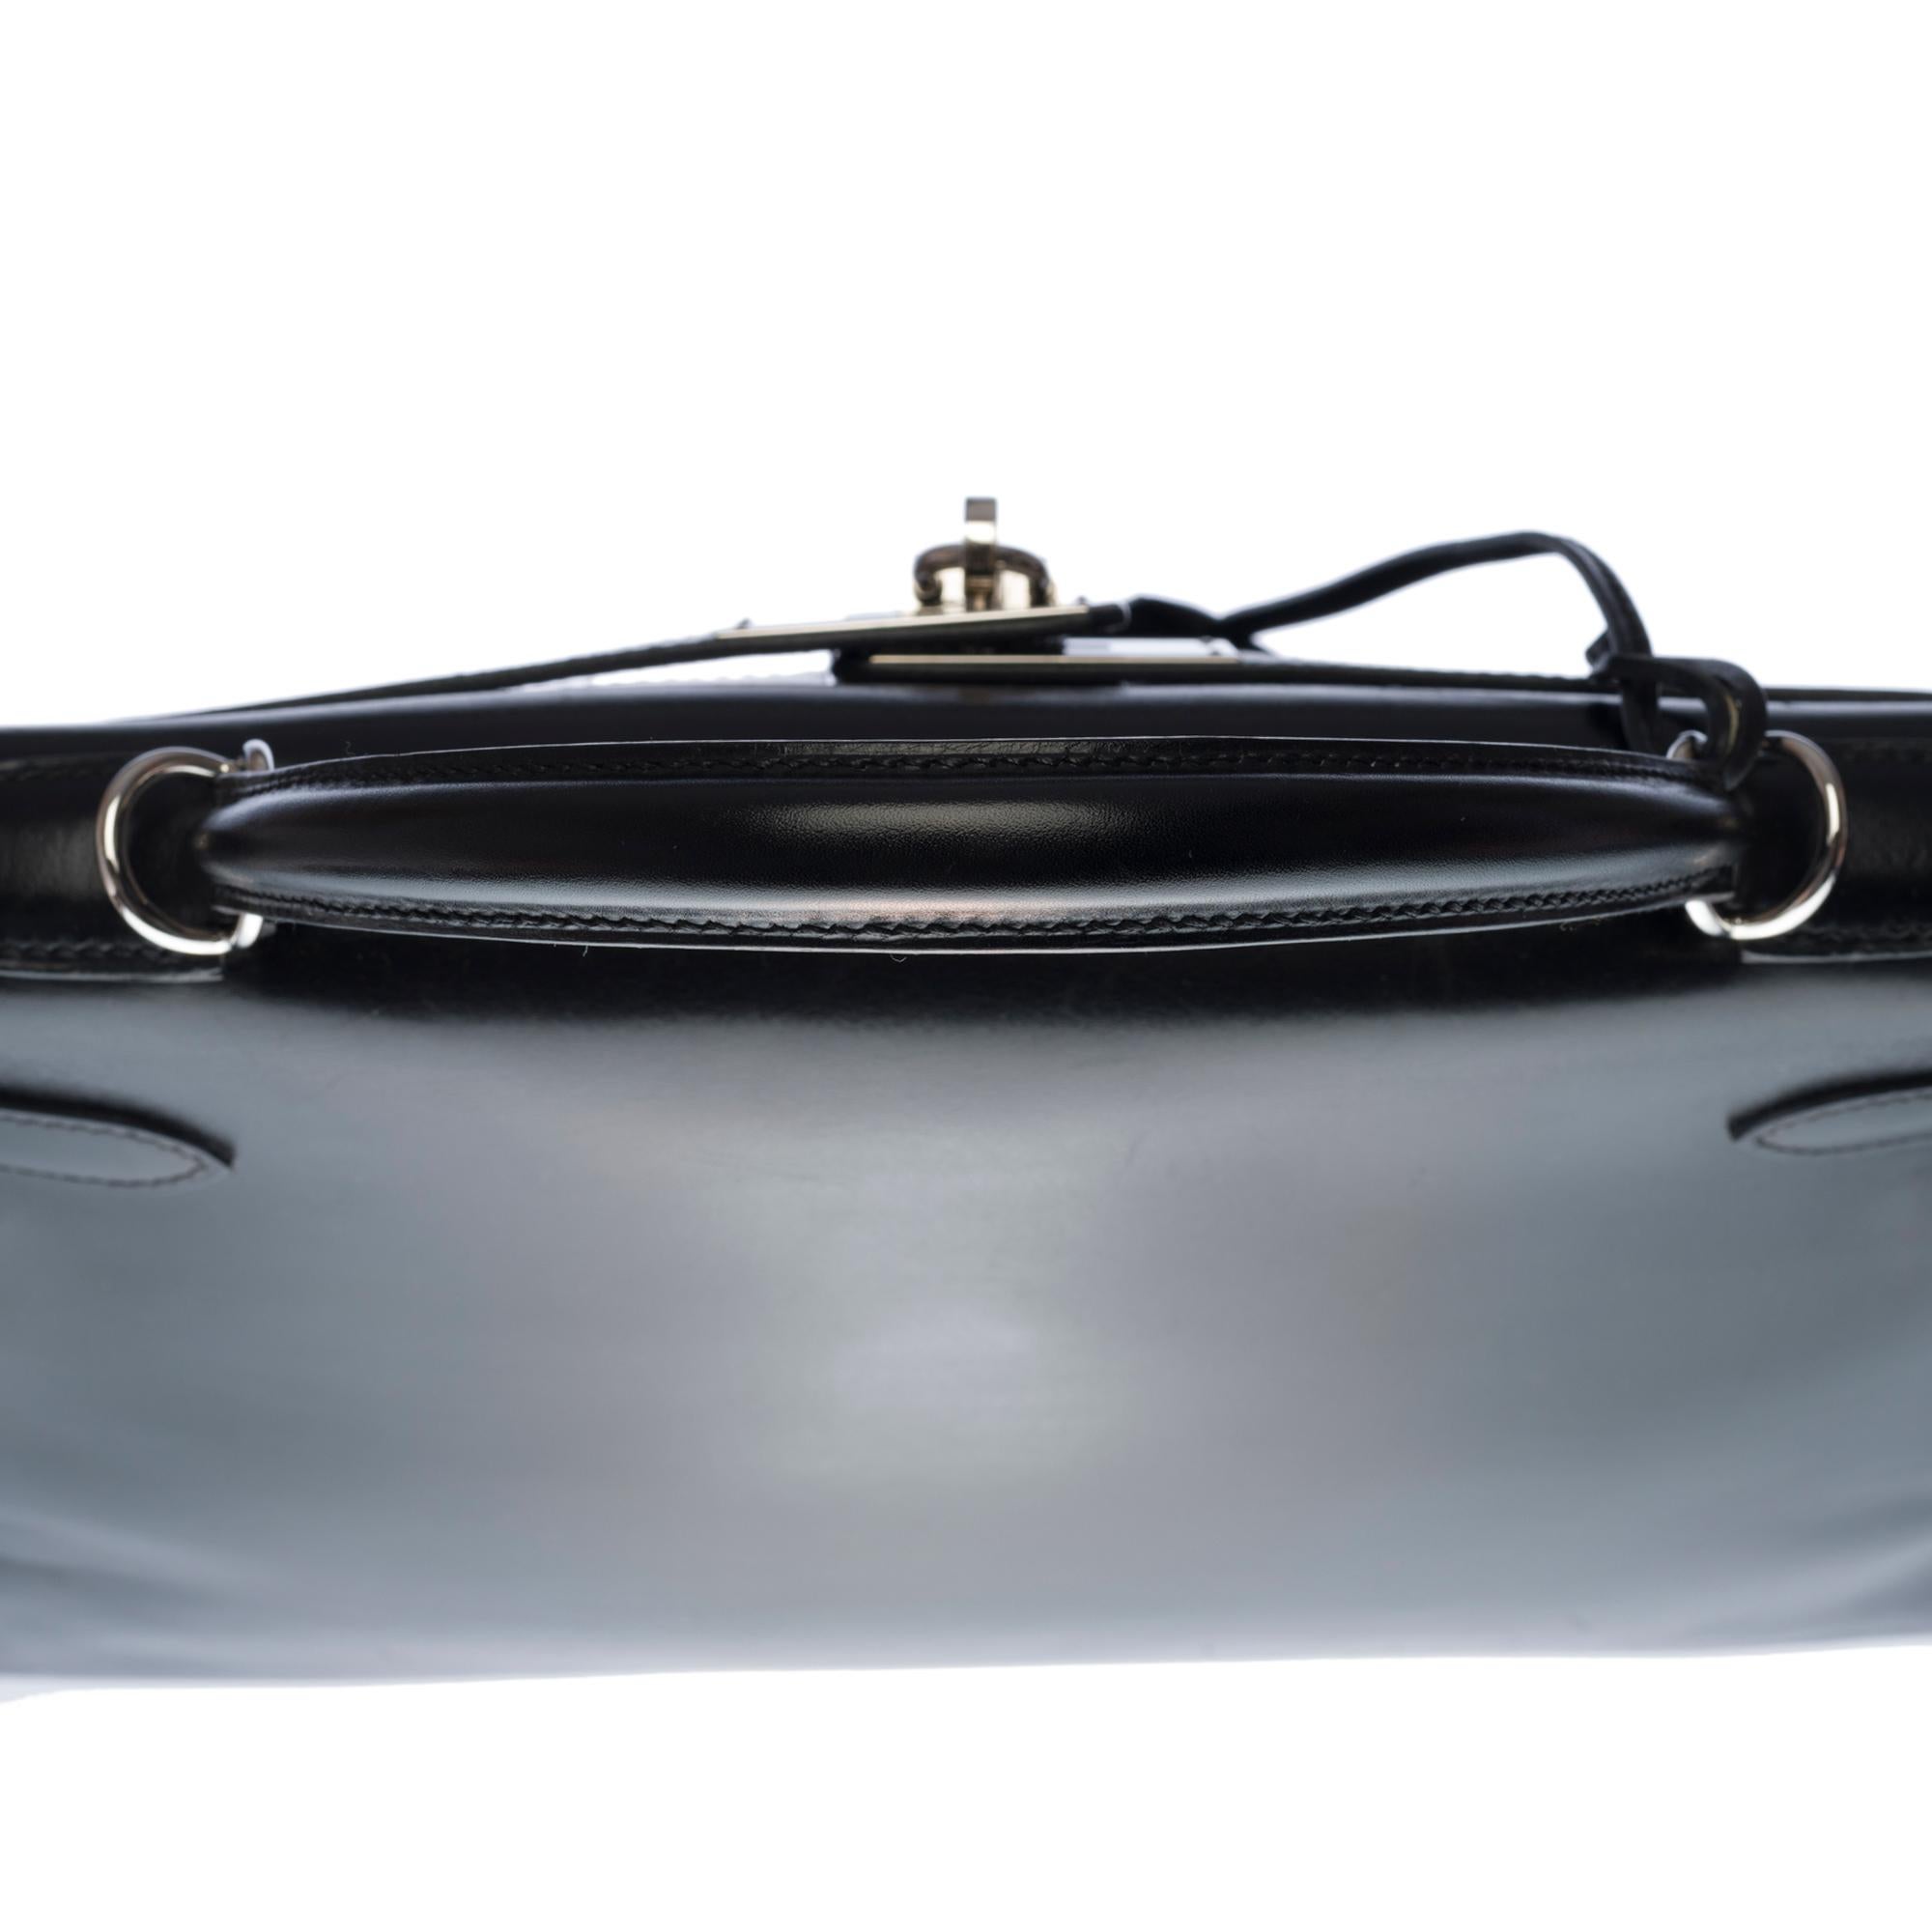 Rare Hermès Kelly 32 retourné handbag with strap in black calf leather, SHW 2